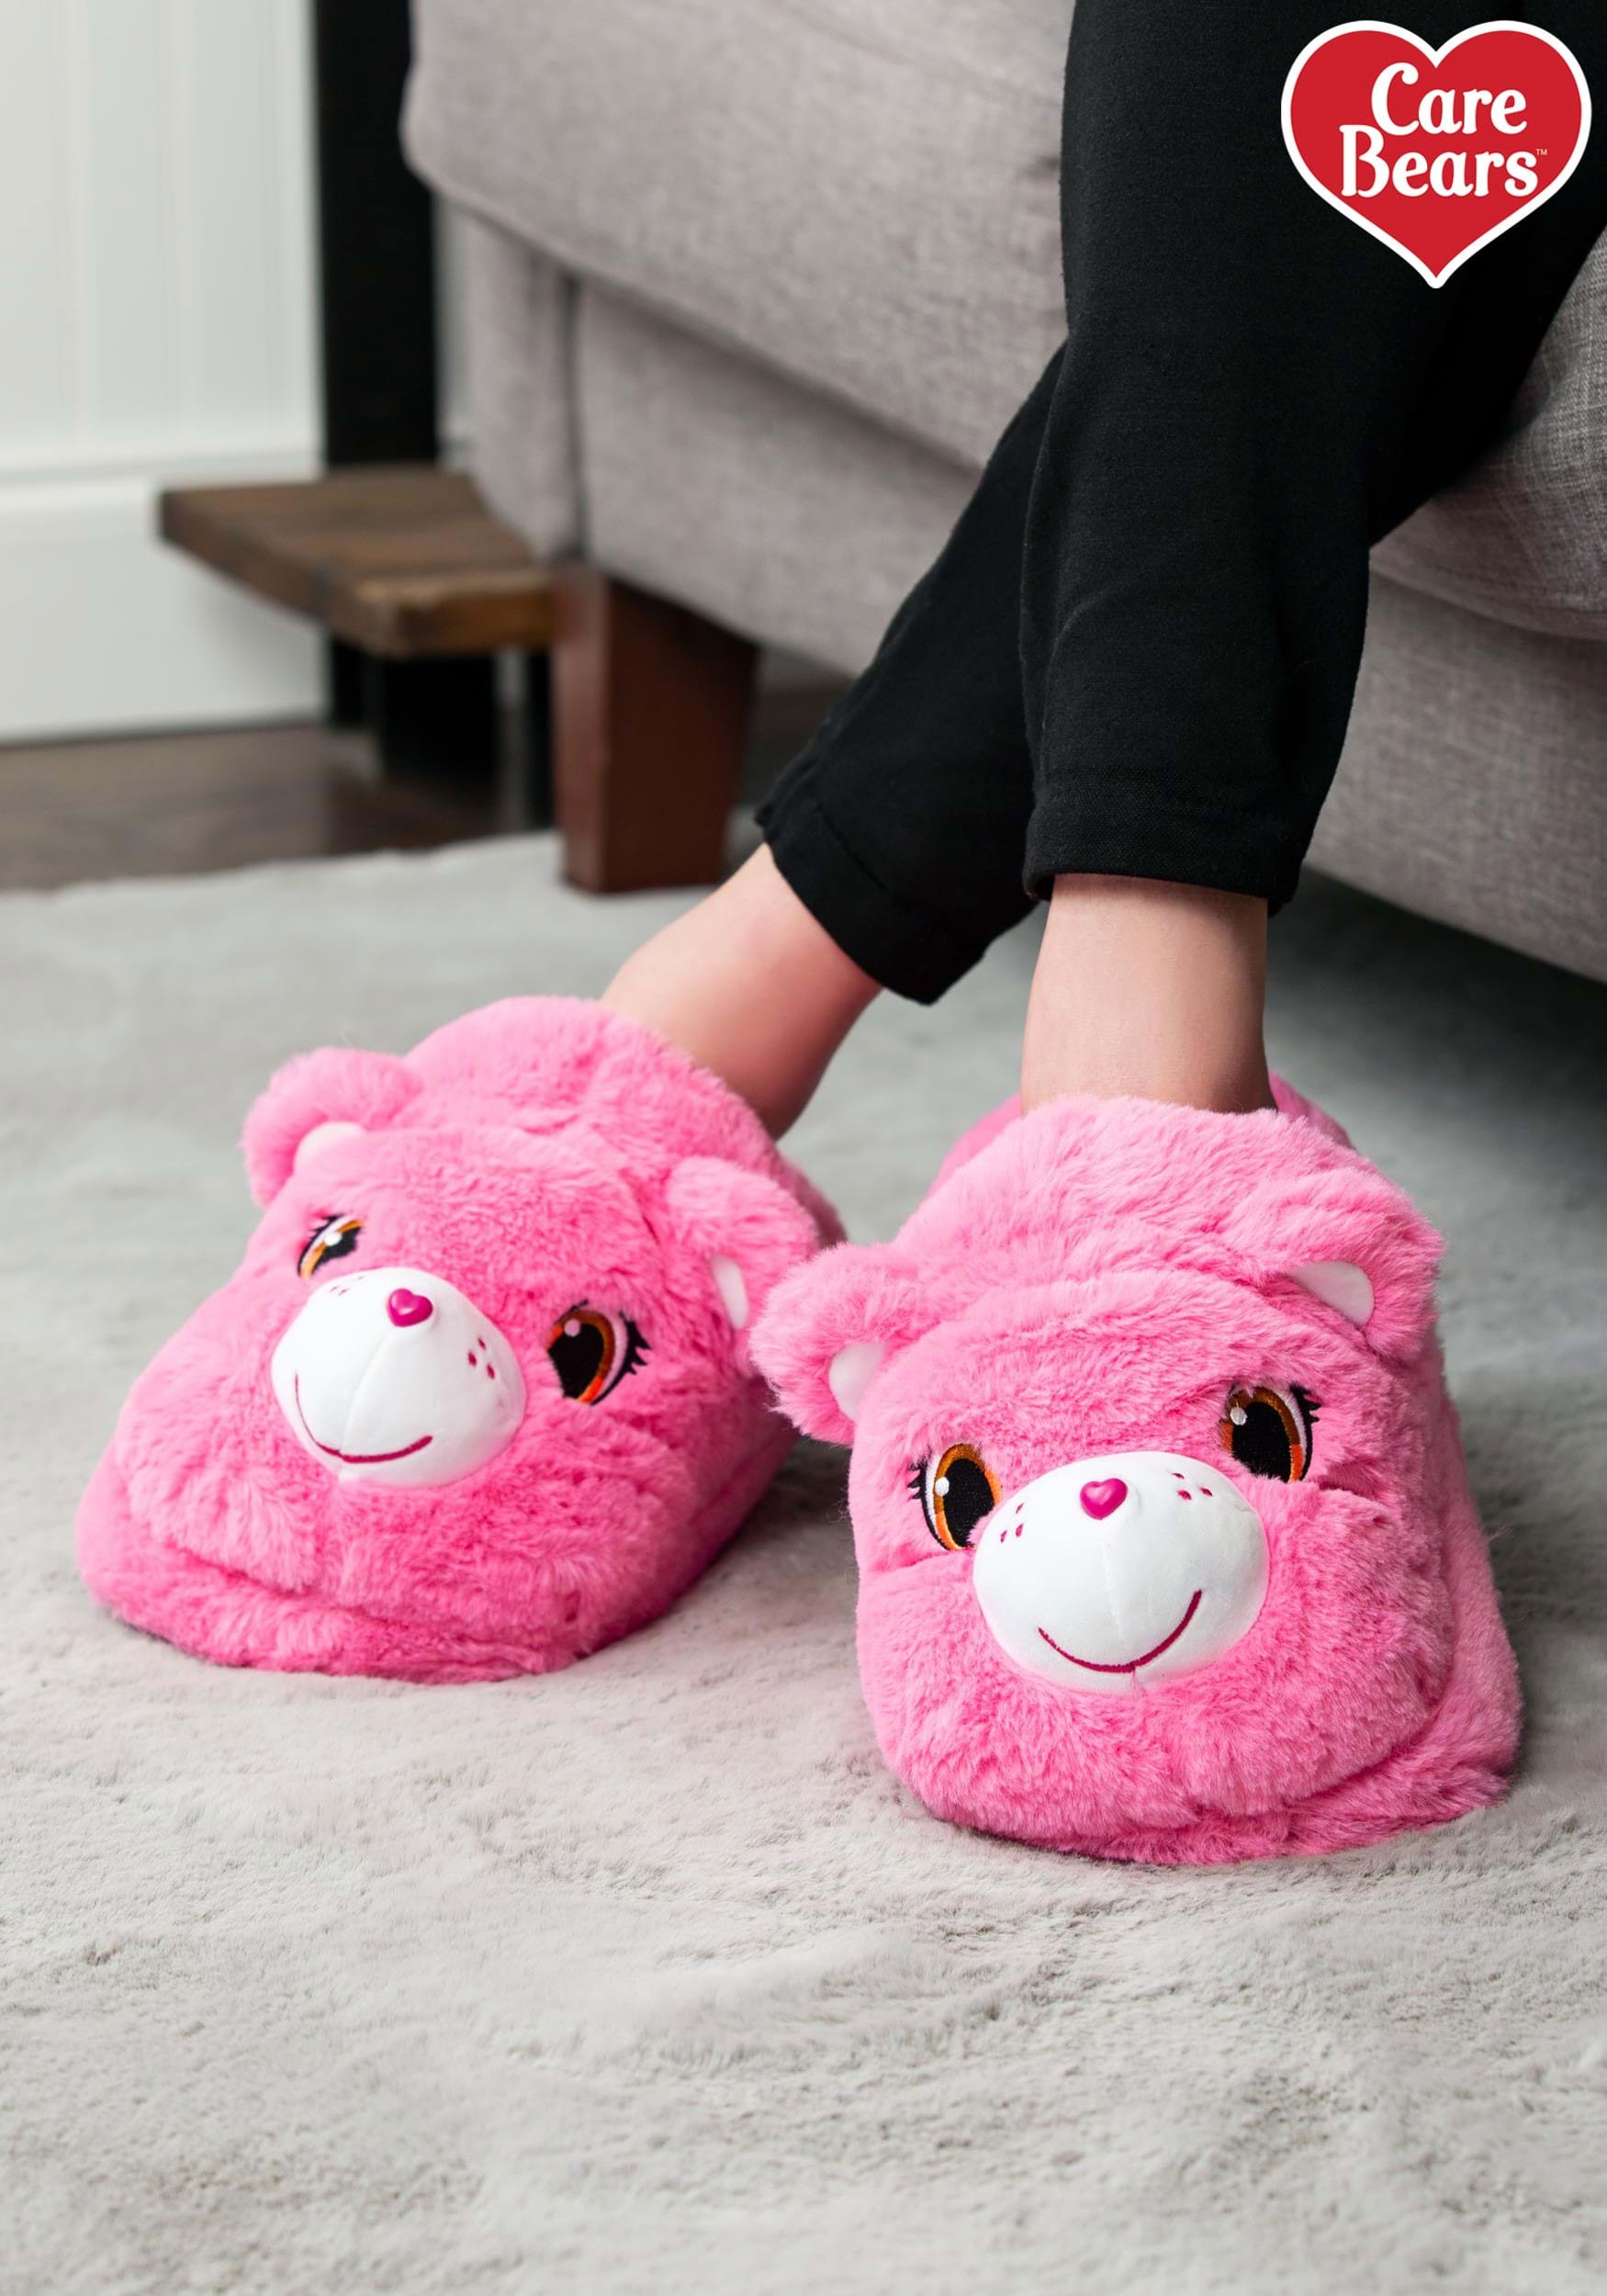 Care Bears Cheer Bear Slippers for Women Pink 